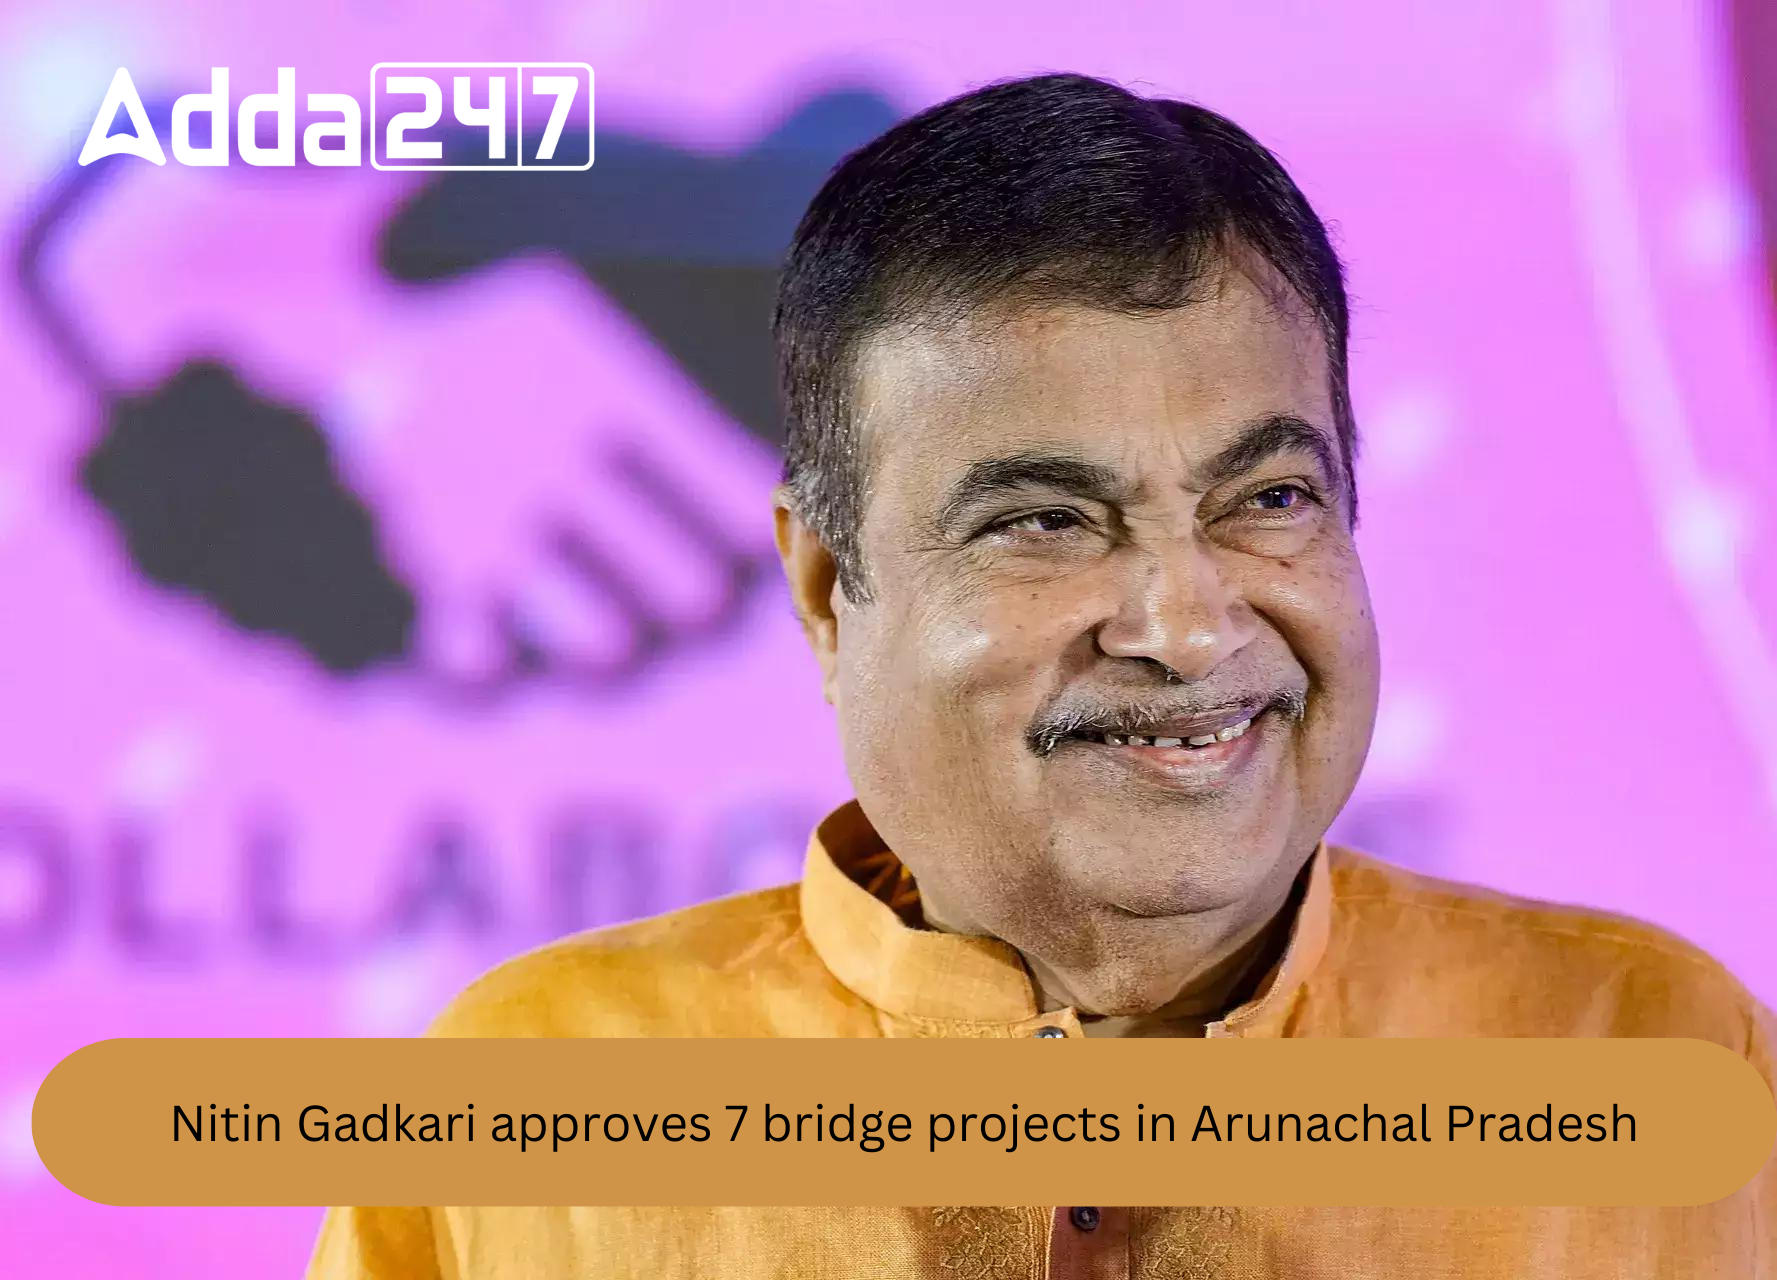 Nitin Gadkari Approves 7 Bridge Projects Worth Rs 118.50 Crore In Arunachal Pradesh